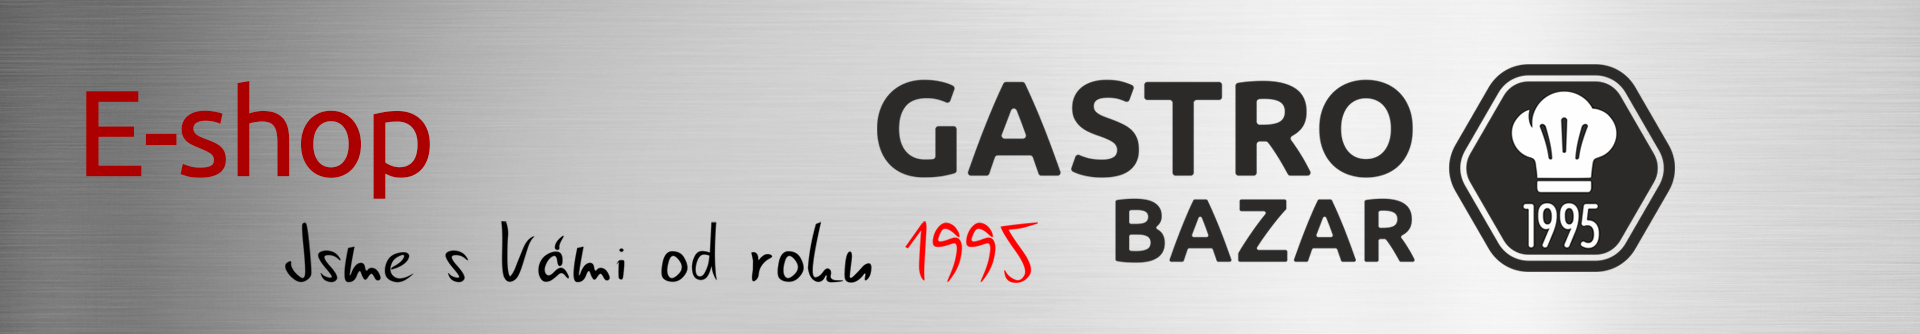 Gastrobazar - prodej gastrotechniky - použitá a nepoužitá gastronomická technika, výkup a likvidace gastro provozů